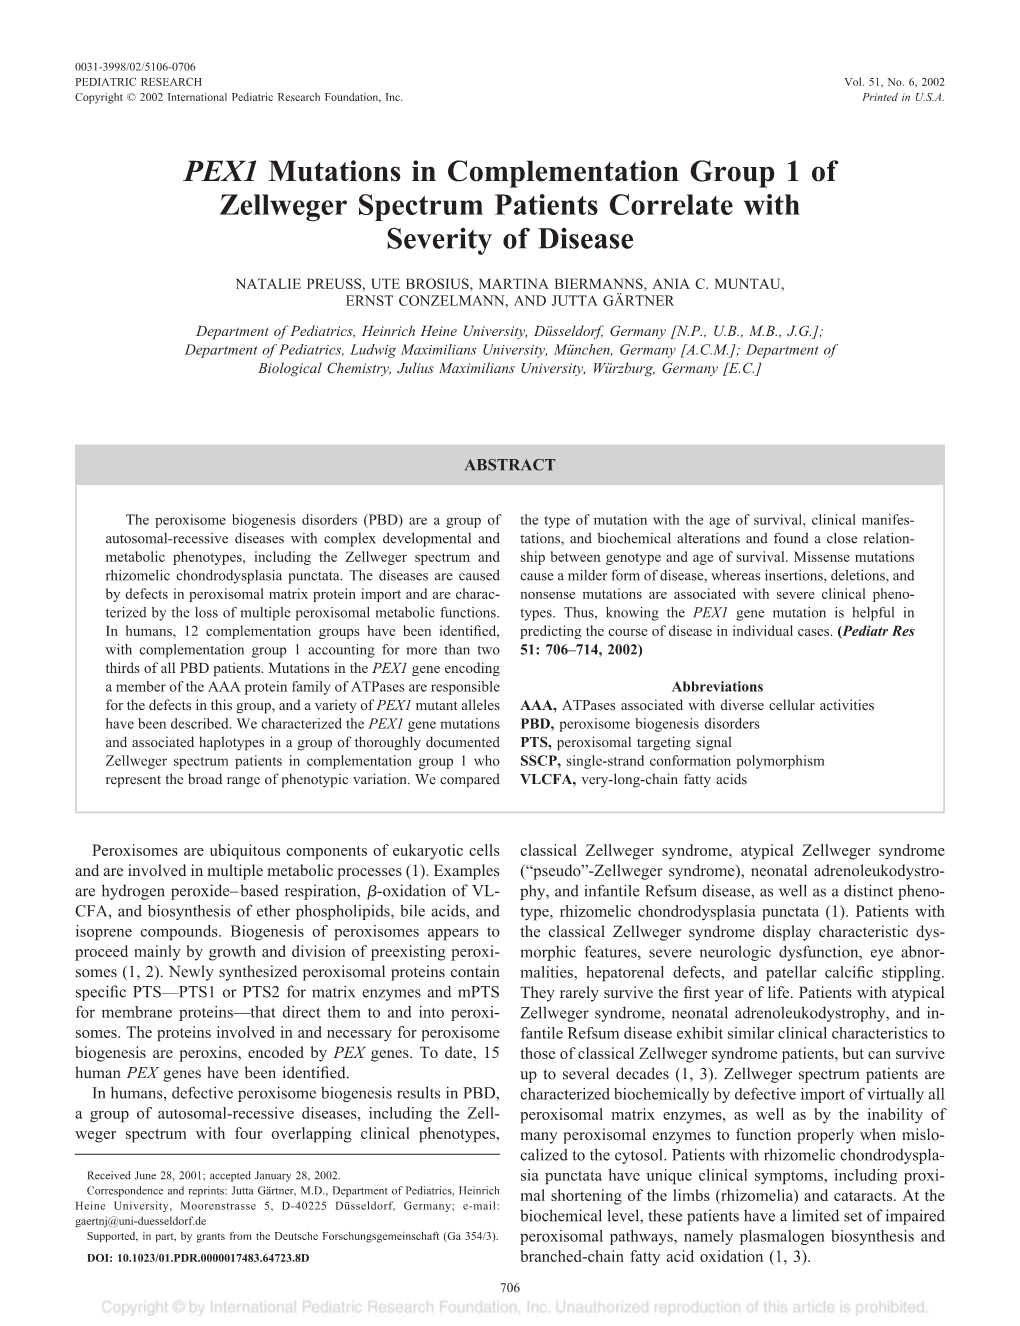 PEX1 Mutations in Complementation Group 1 of Zellweger Spectrum Patients Correlate with Severity of Disease